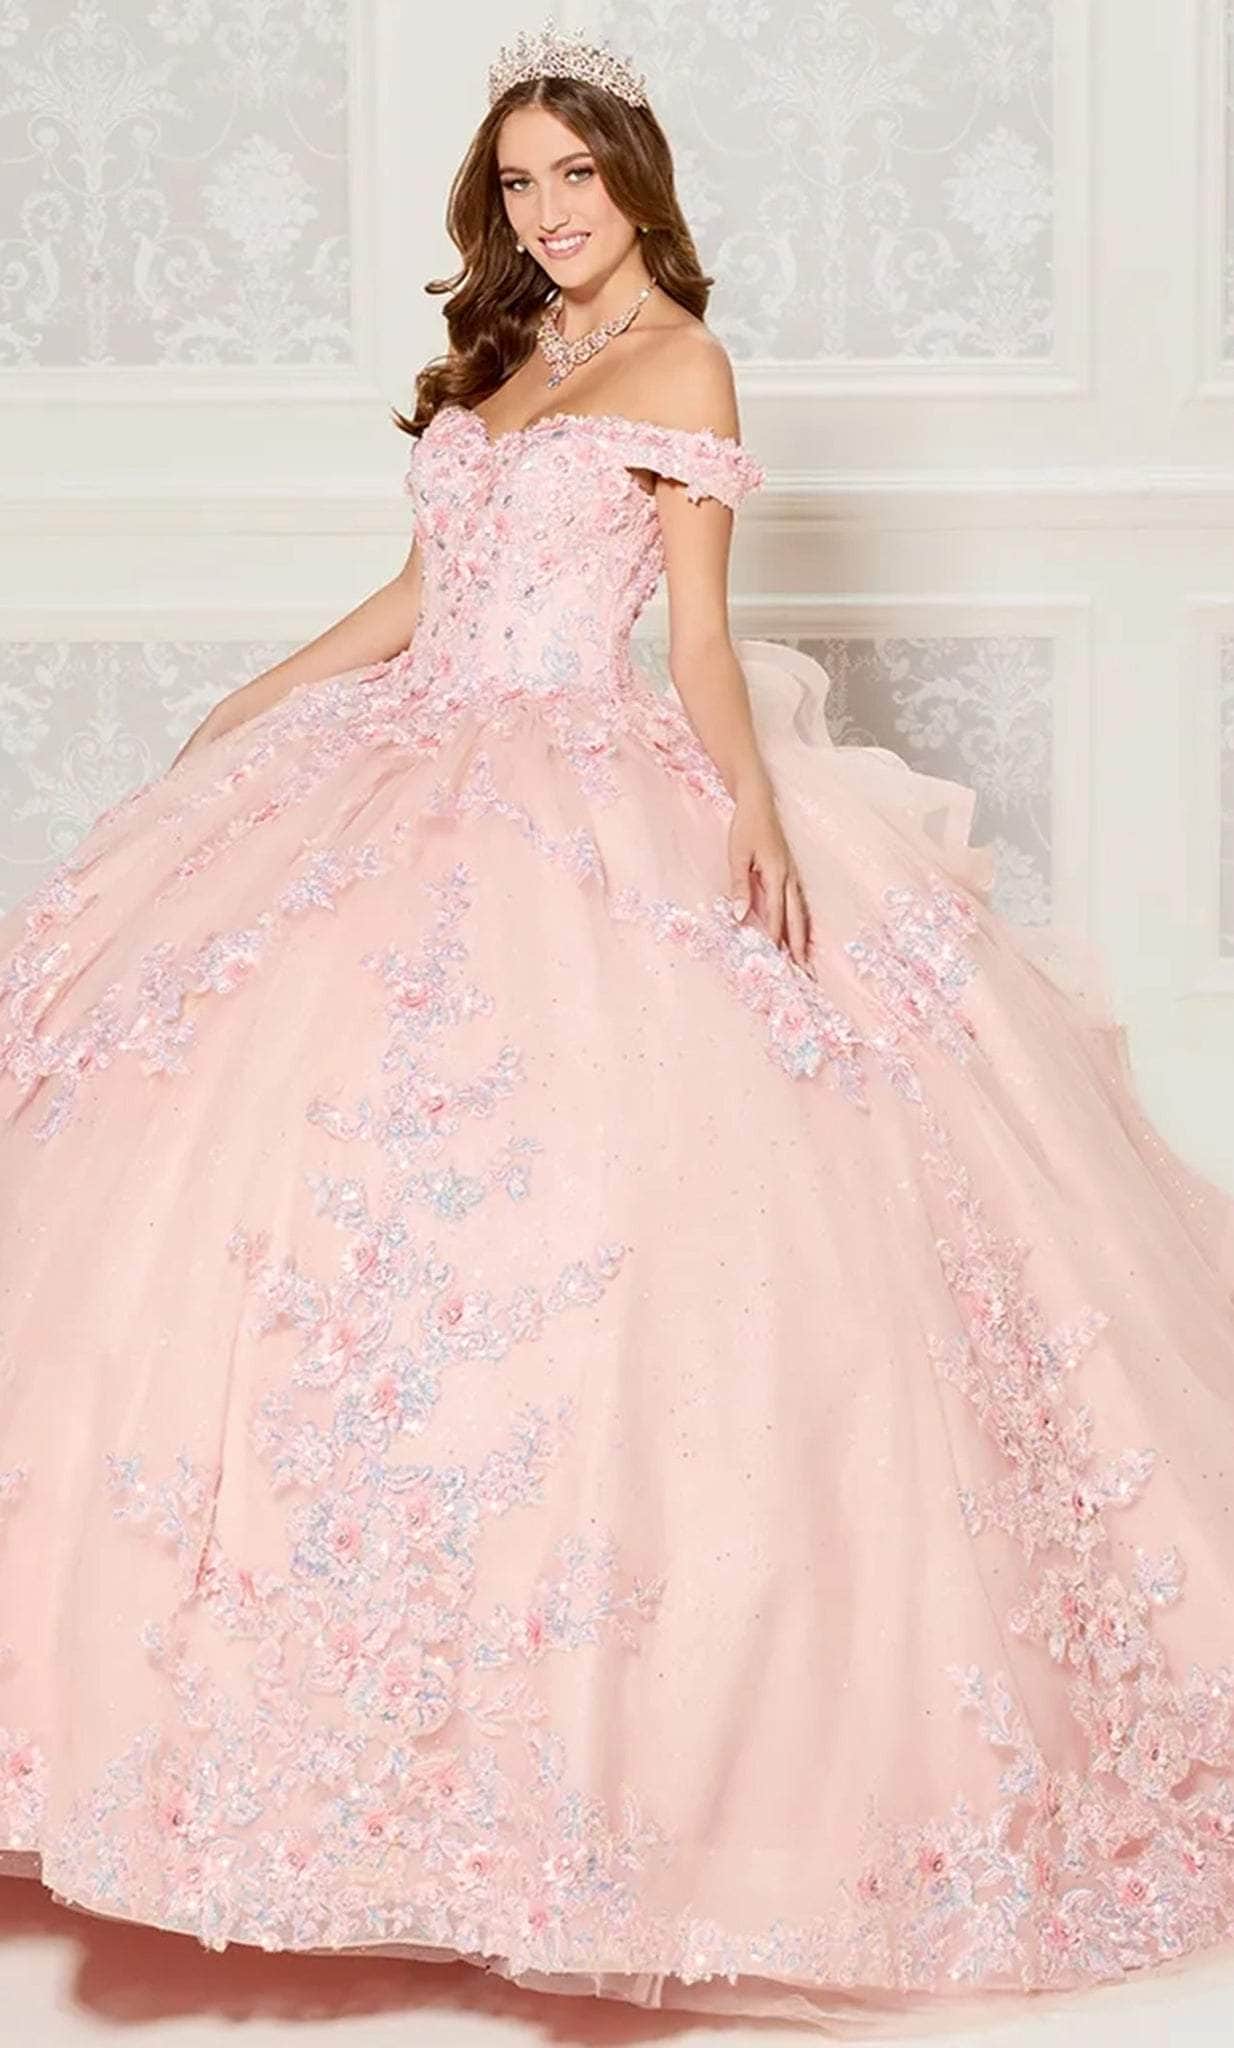 Princesa by Ariana Vara PR30116 - Floral Gown